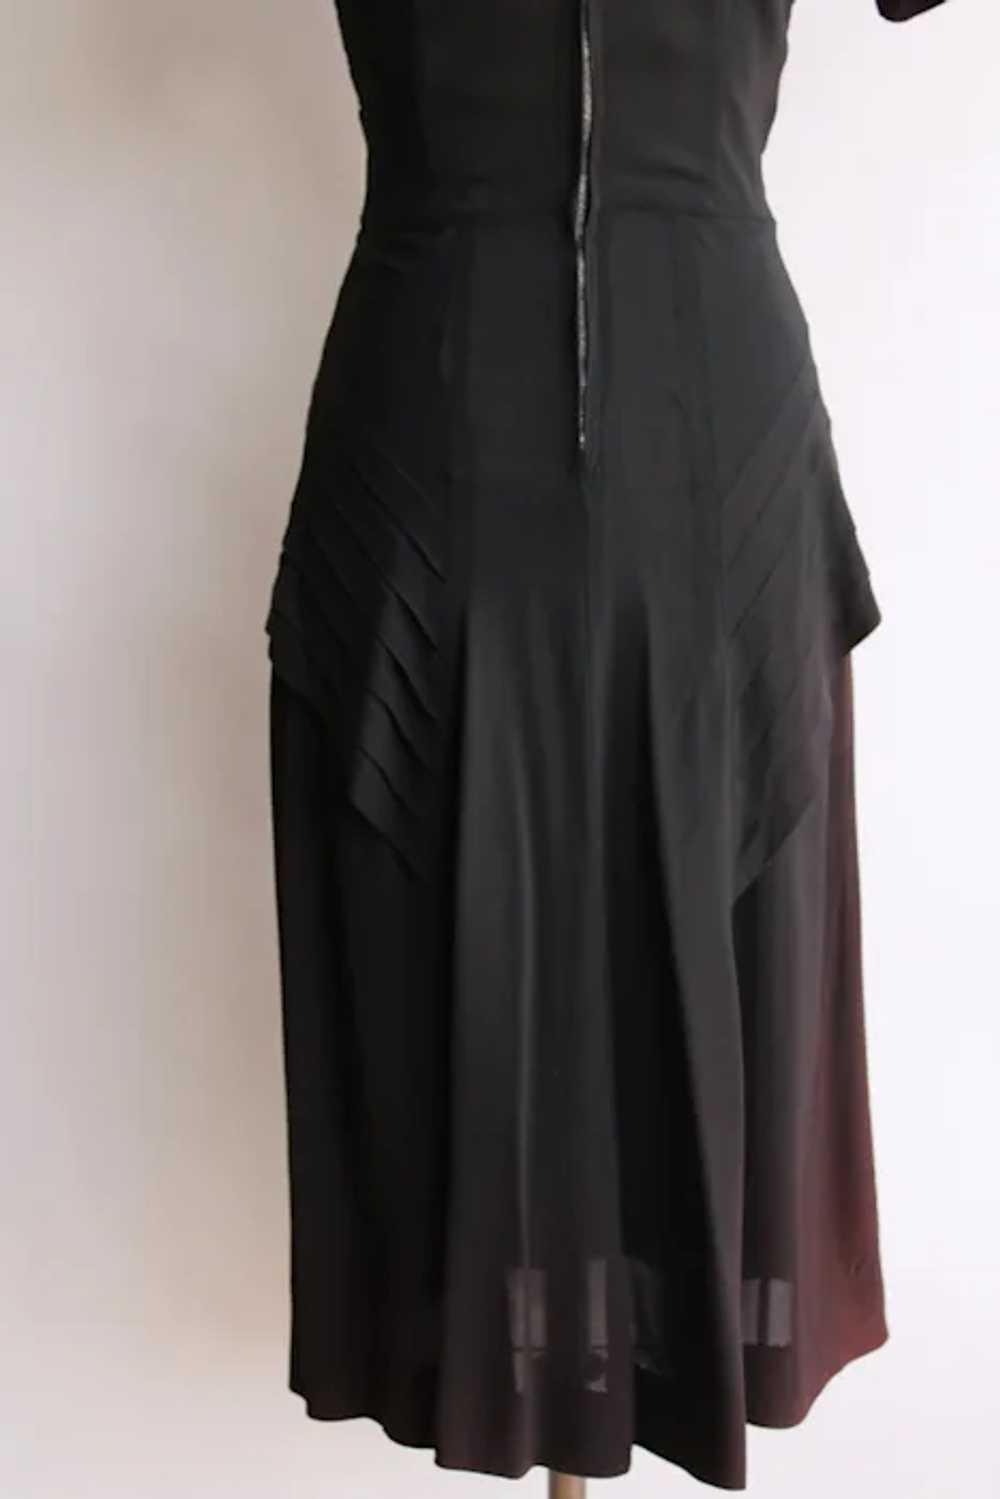 Vintage 1940s Dress / Black Rayon Dress With Sout… - image 9